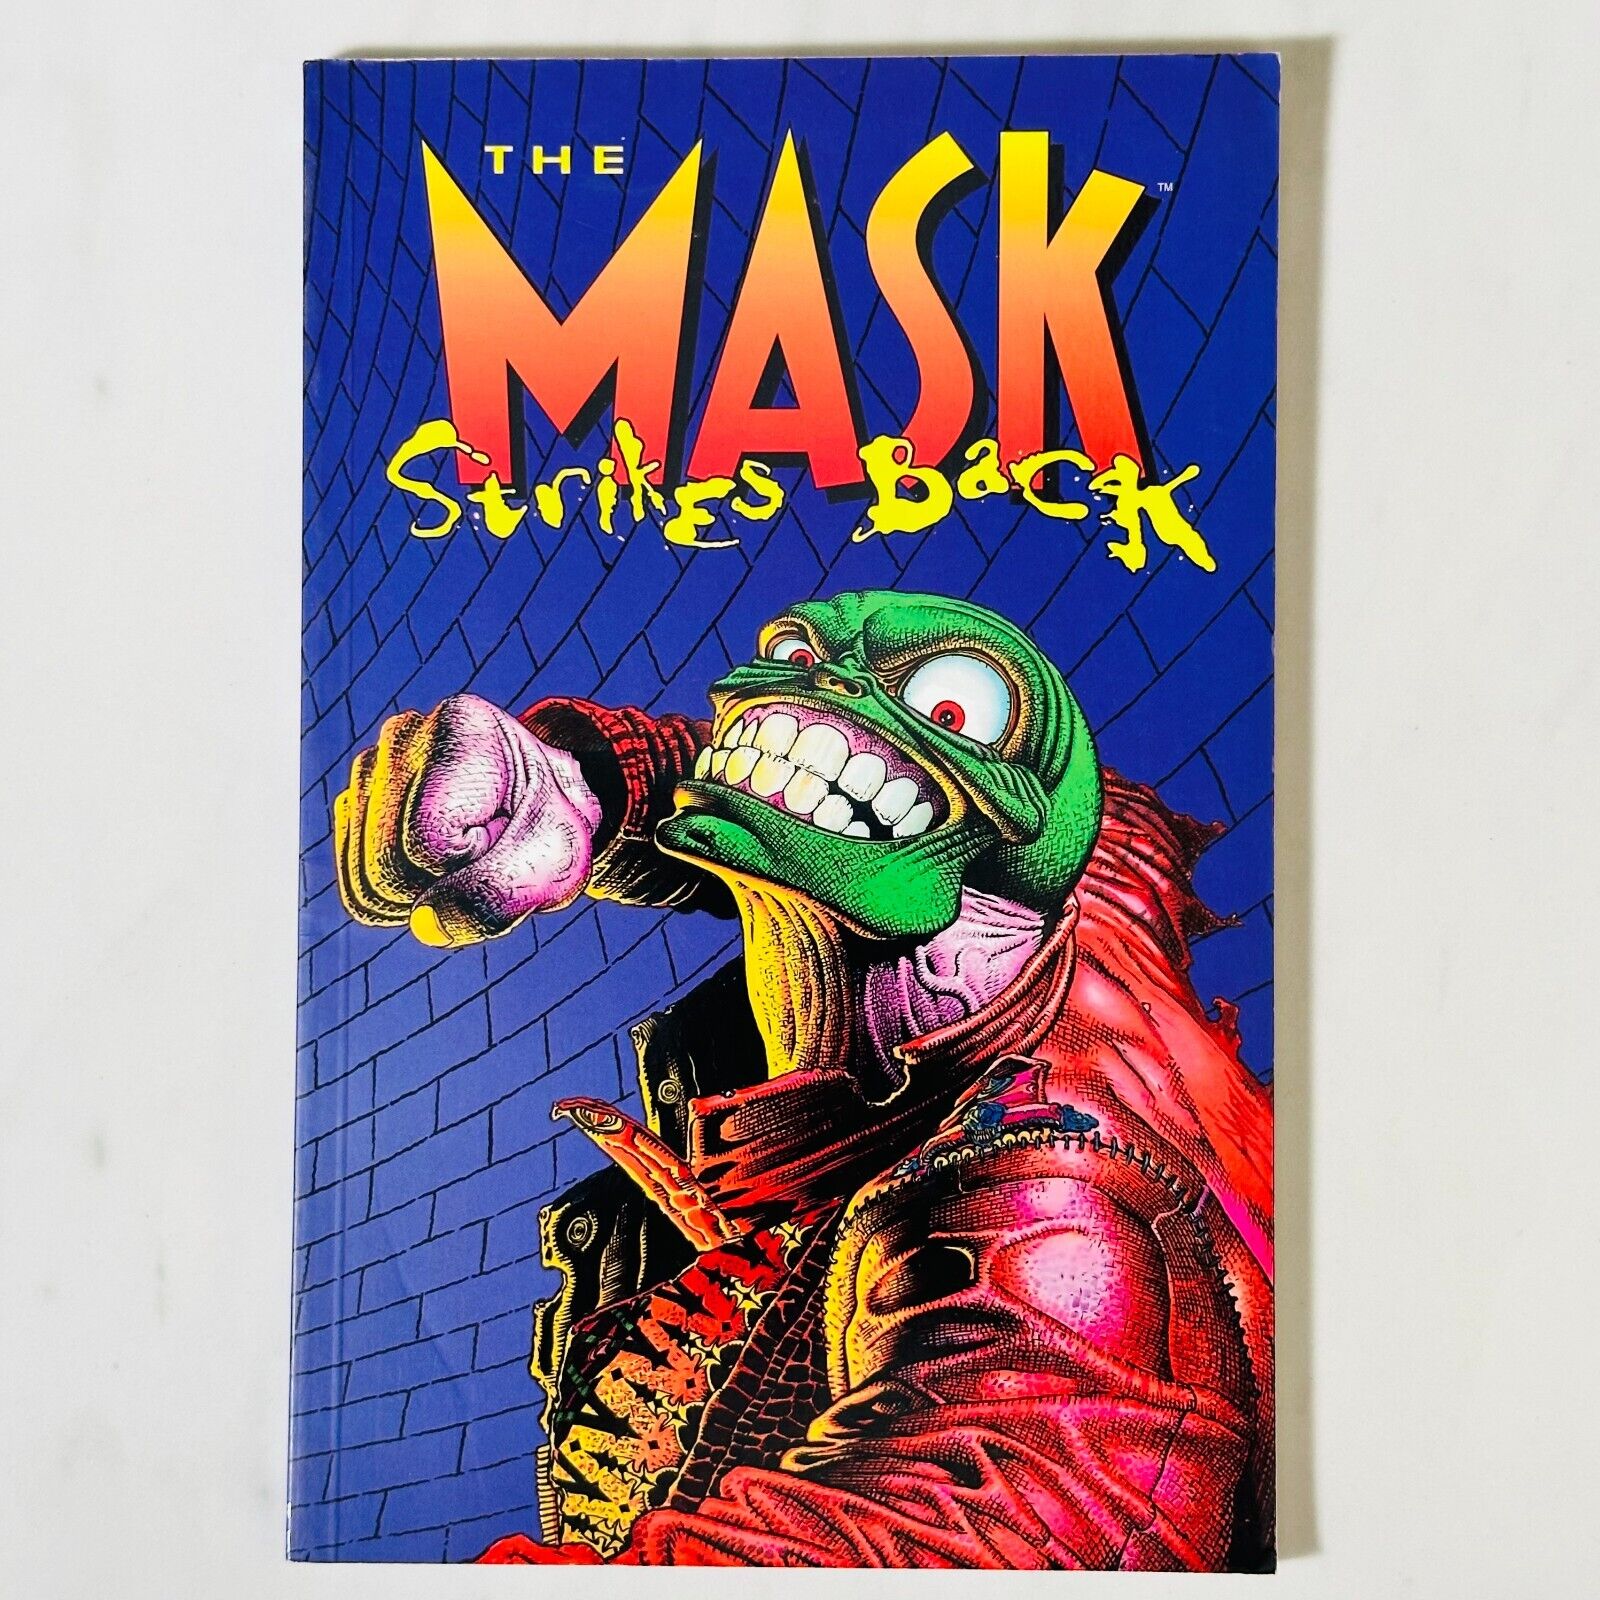 The Mask TPB #1 - Dark Horse - the Mask Strikes Back - 1996